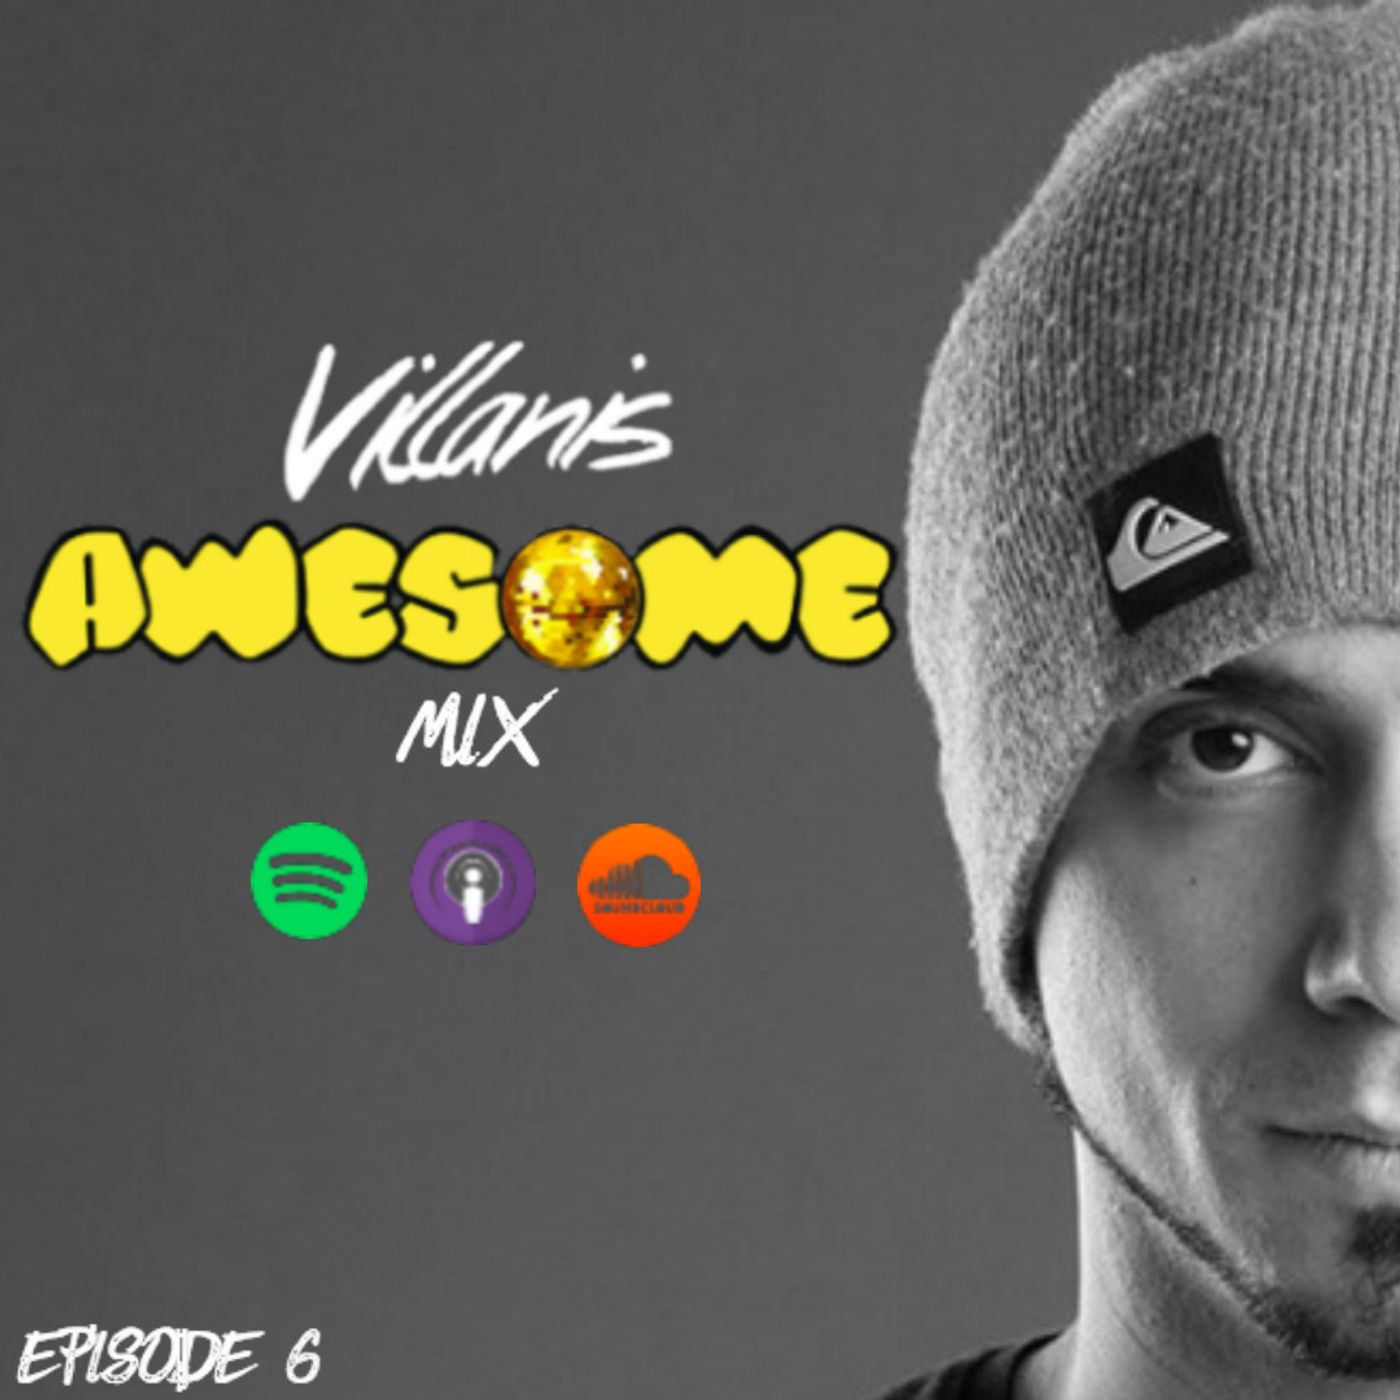 Villanis Awesome Mix Ep. 6 - Radio Show